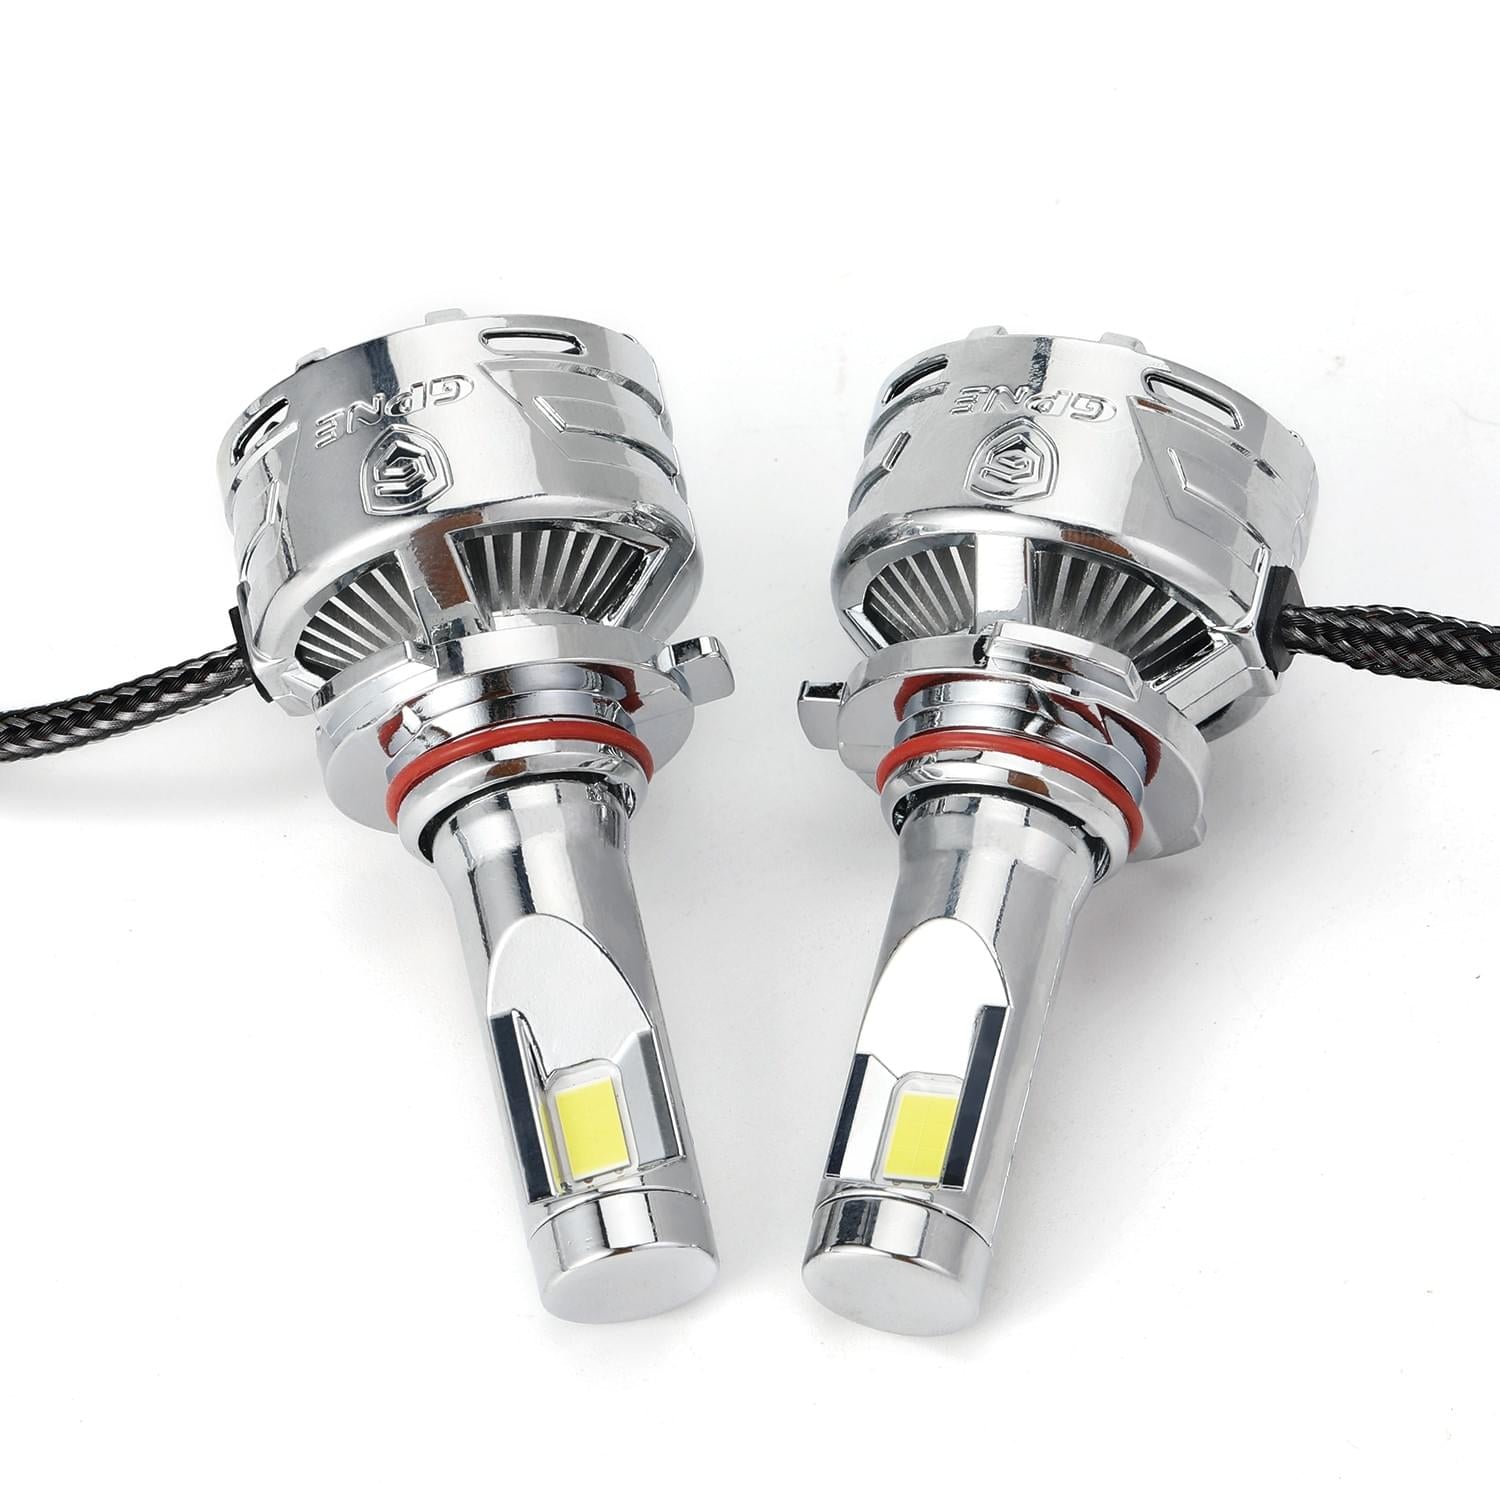 GPNE RS7 LED Headlight Bulb 110W/Lamp Nature White 6000K 28000LM 9-32V DC